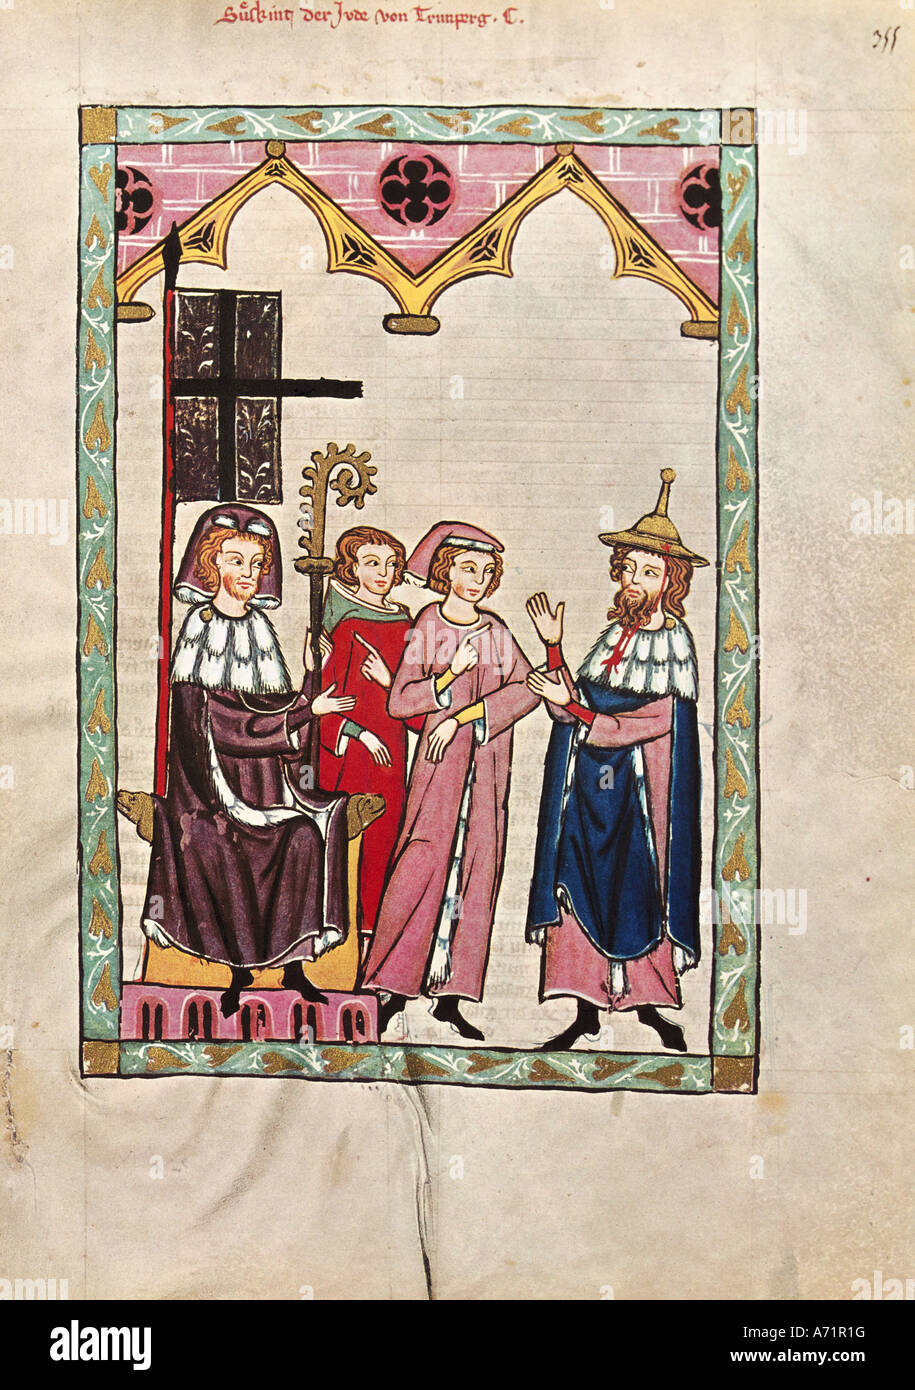 fine arts, middle ages, Gothic, illumination, Codex Manesse, Zurich, 1305 - 1340, Süßkind von Trimberg, covering colour on vellu Stock Photo